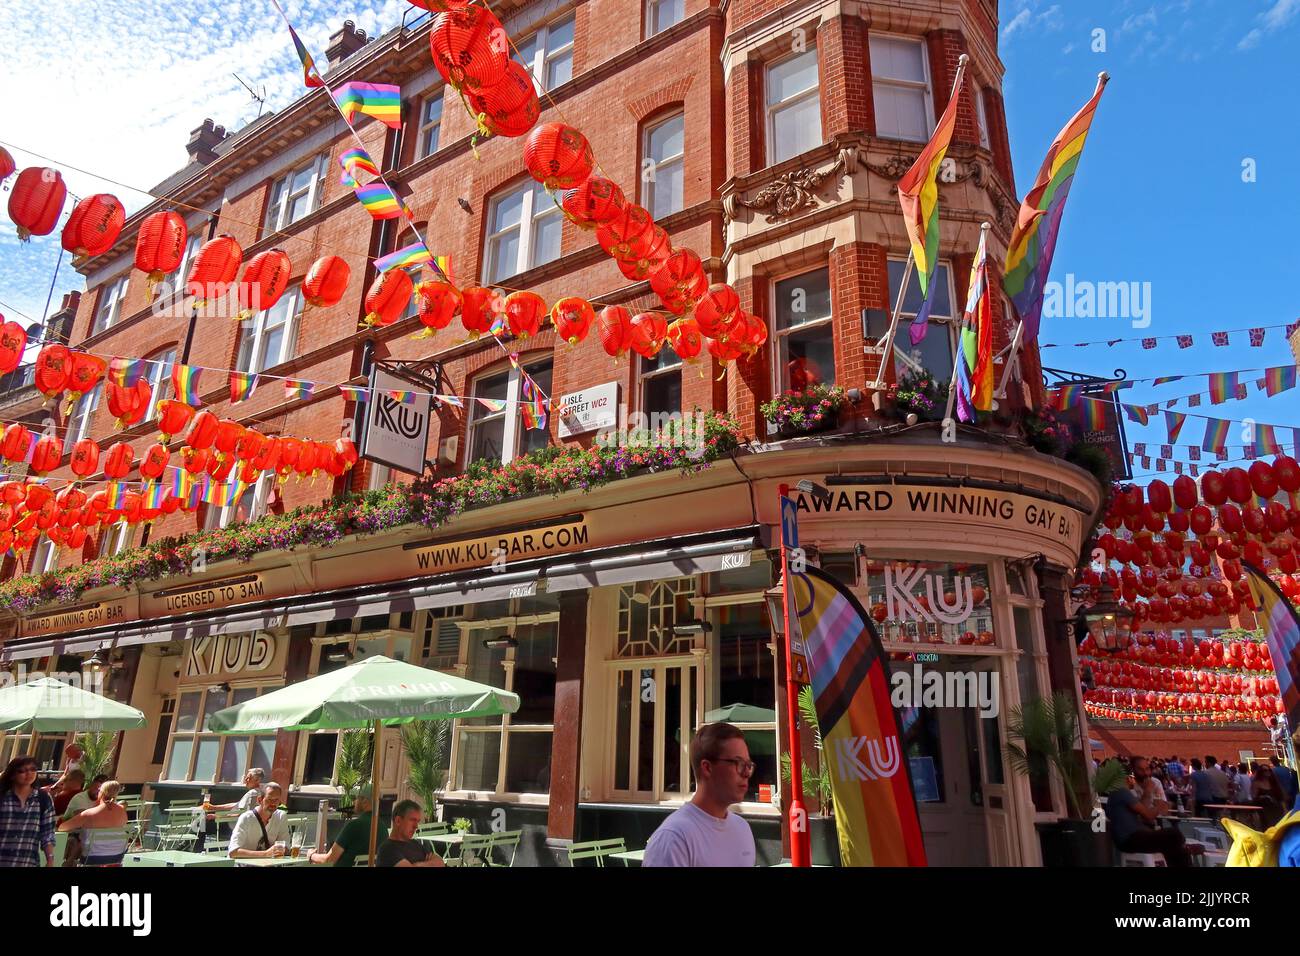 Ku-Bar Award winning Gay Bar, Chinese red lanterns in Gerard Street, Soho, London, England, UK, W1D 5QD Stock Photo